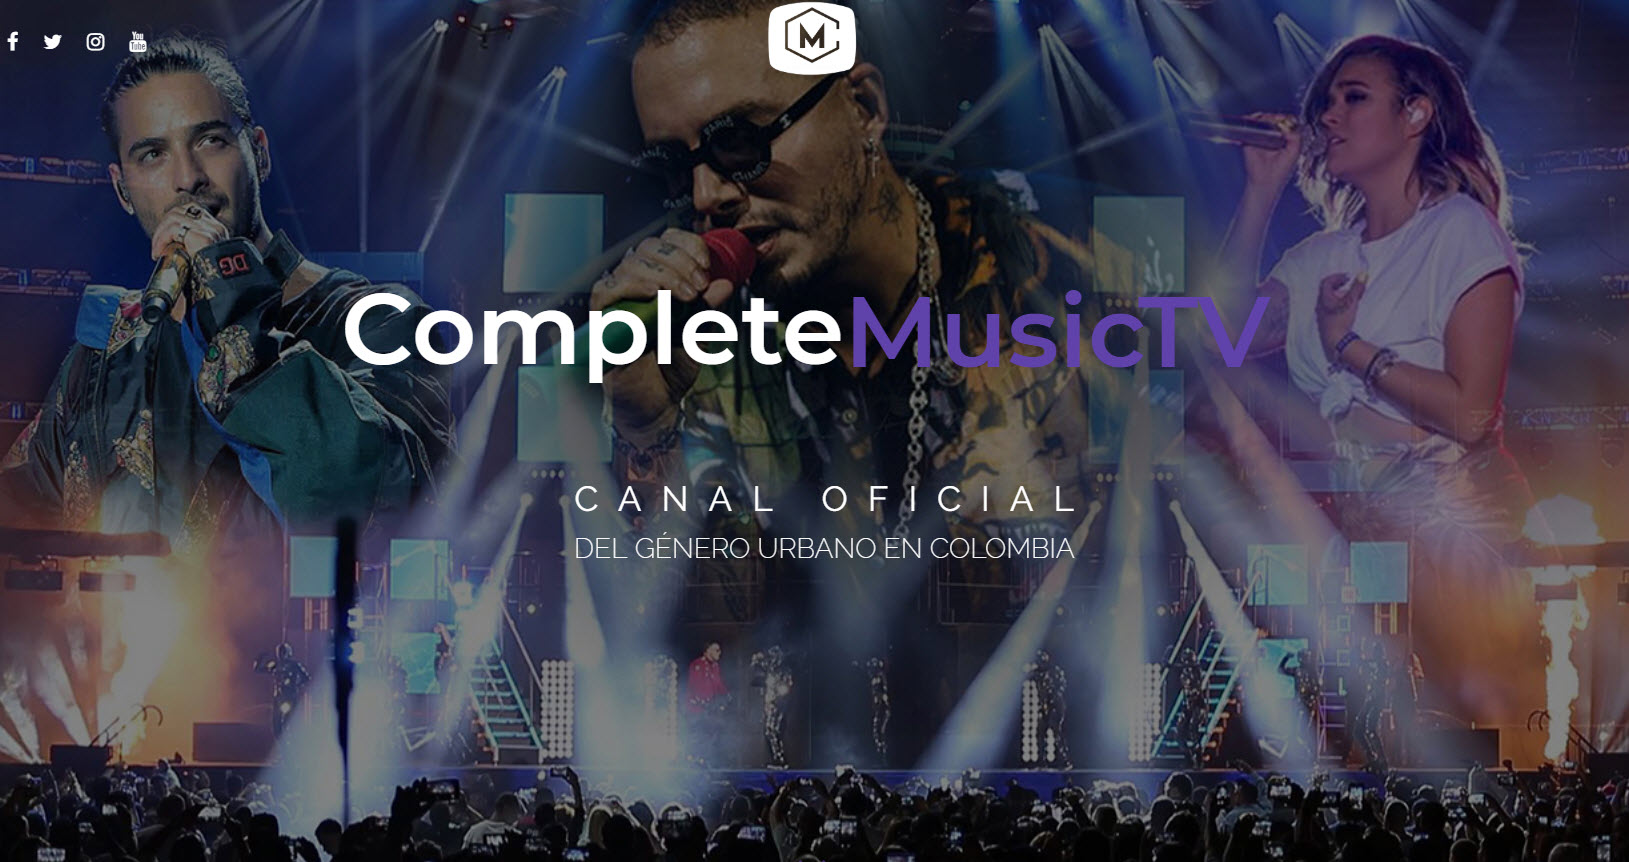 CompleteMusicTV is a revolutionary Colombian Media &amp; Entertainment Platform